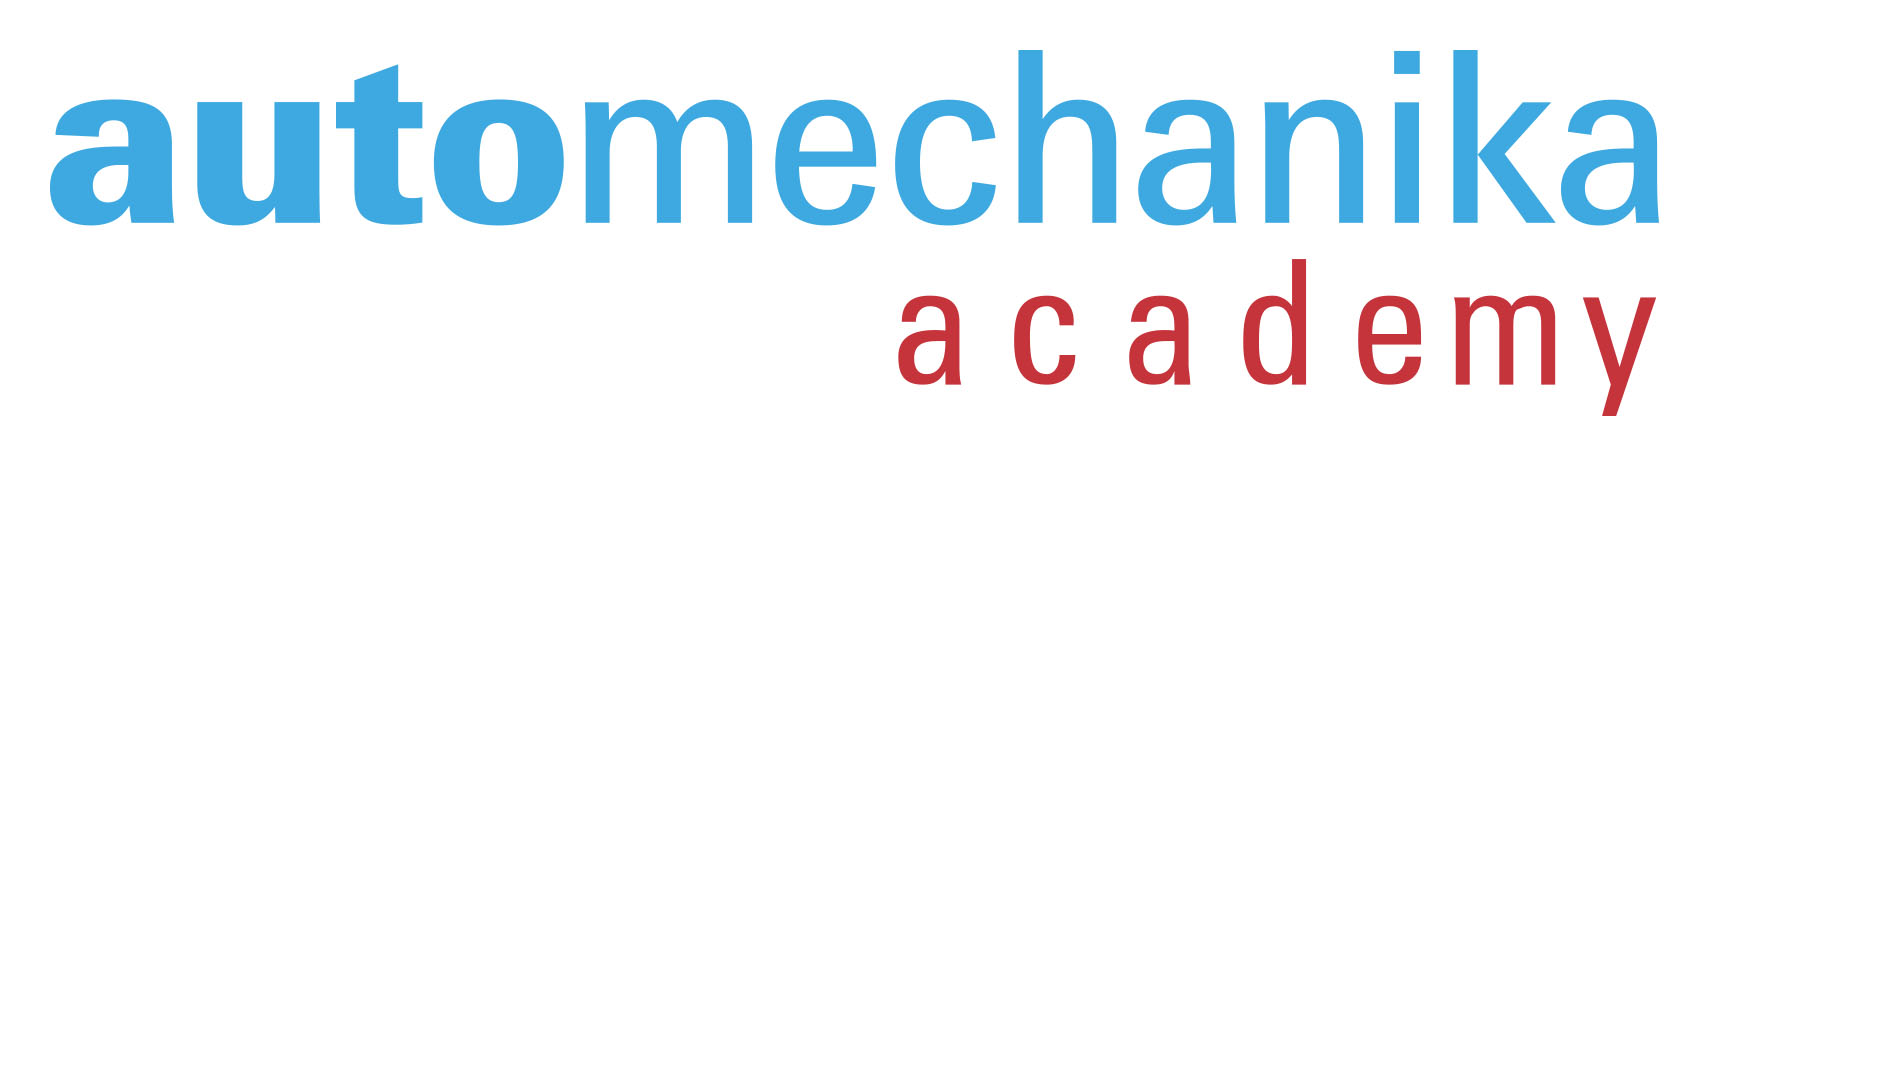 Automechanika Academy